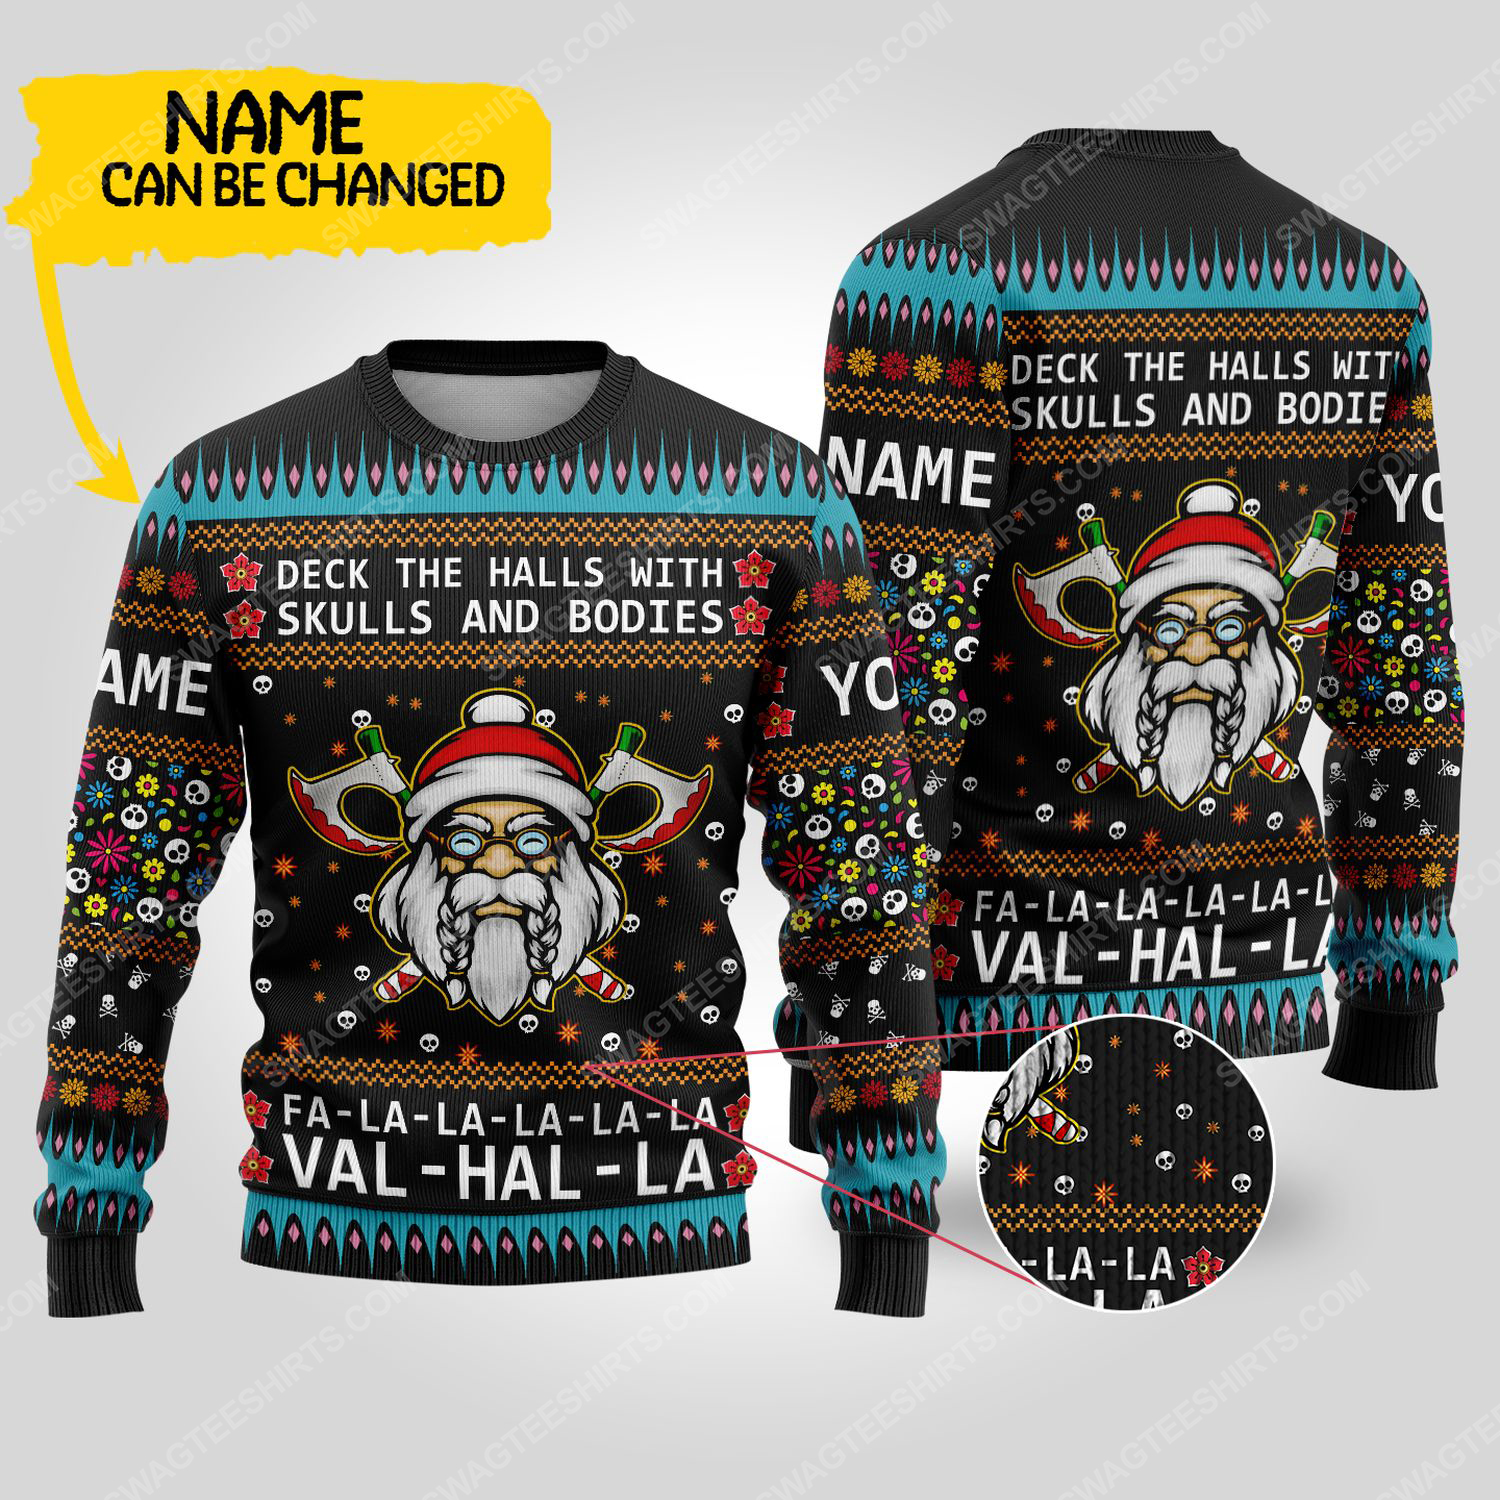 Custom deck the halls with skulls and bodies fa-la-la-la valhalla-la viking ugly christmas sweater 1 - Copy (3)